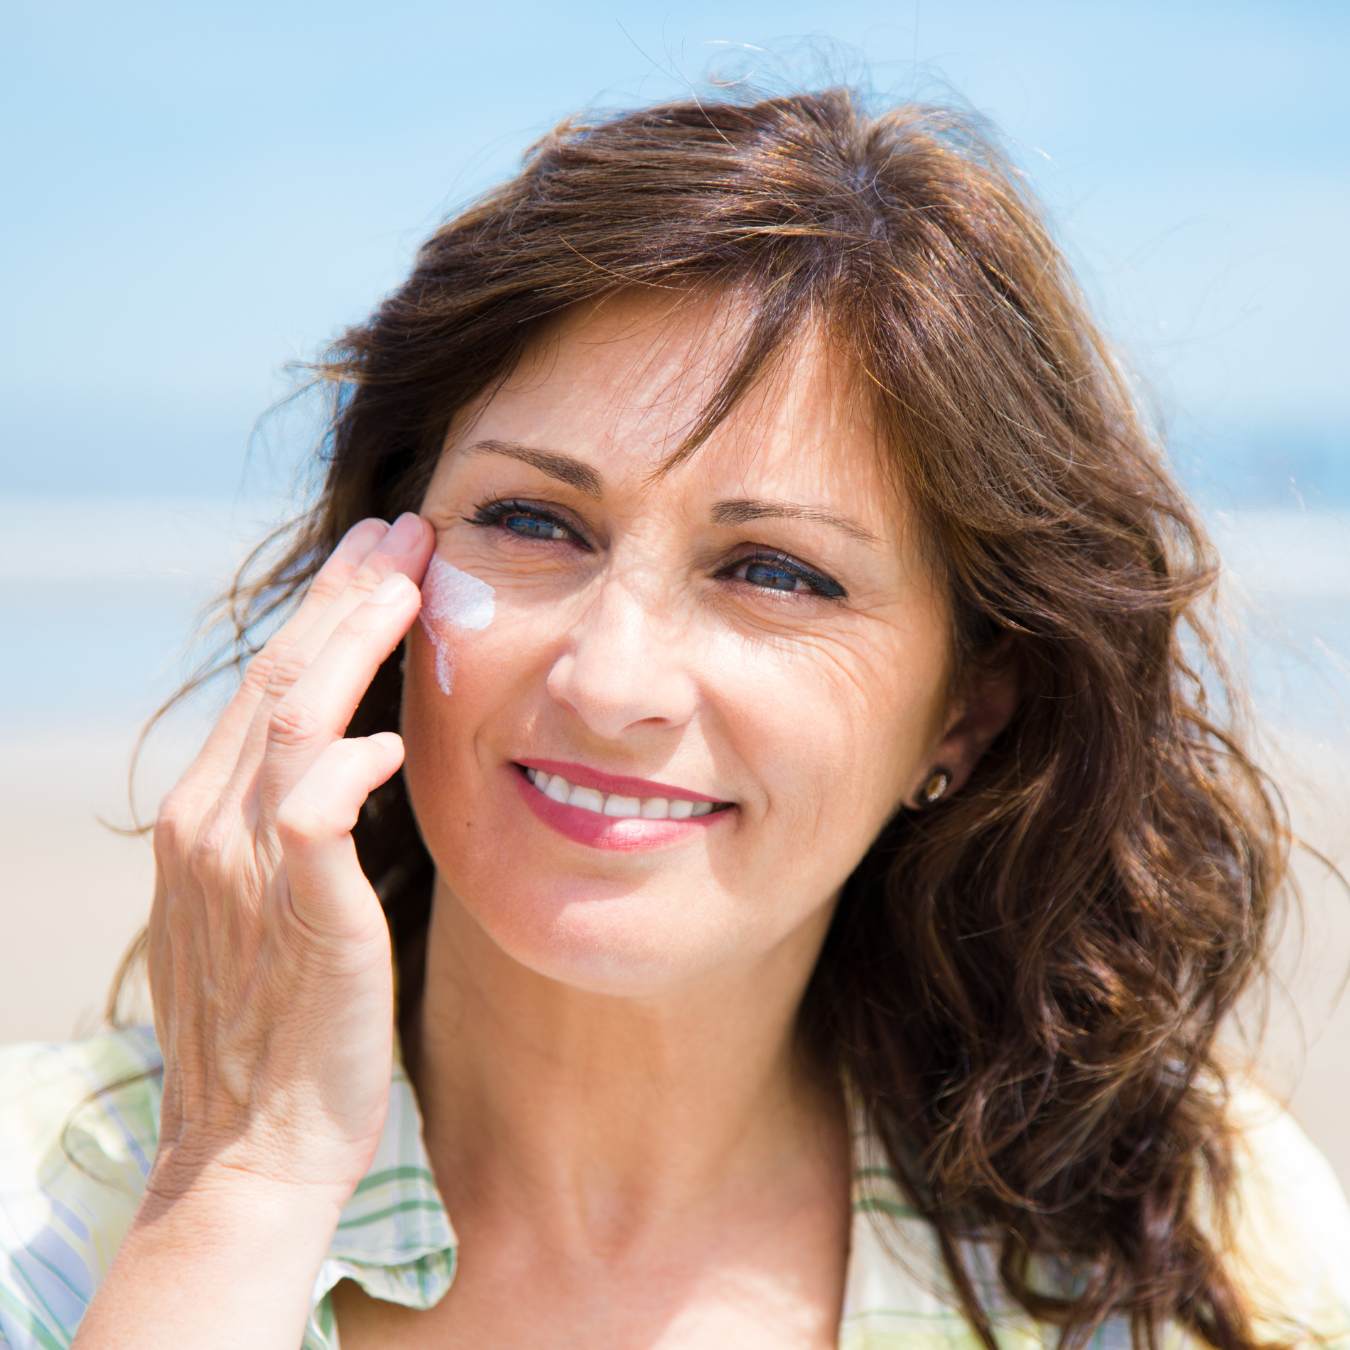 women in her 40s applying sunscreen